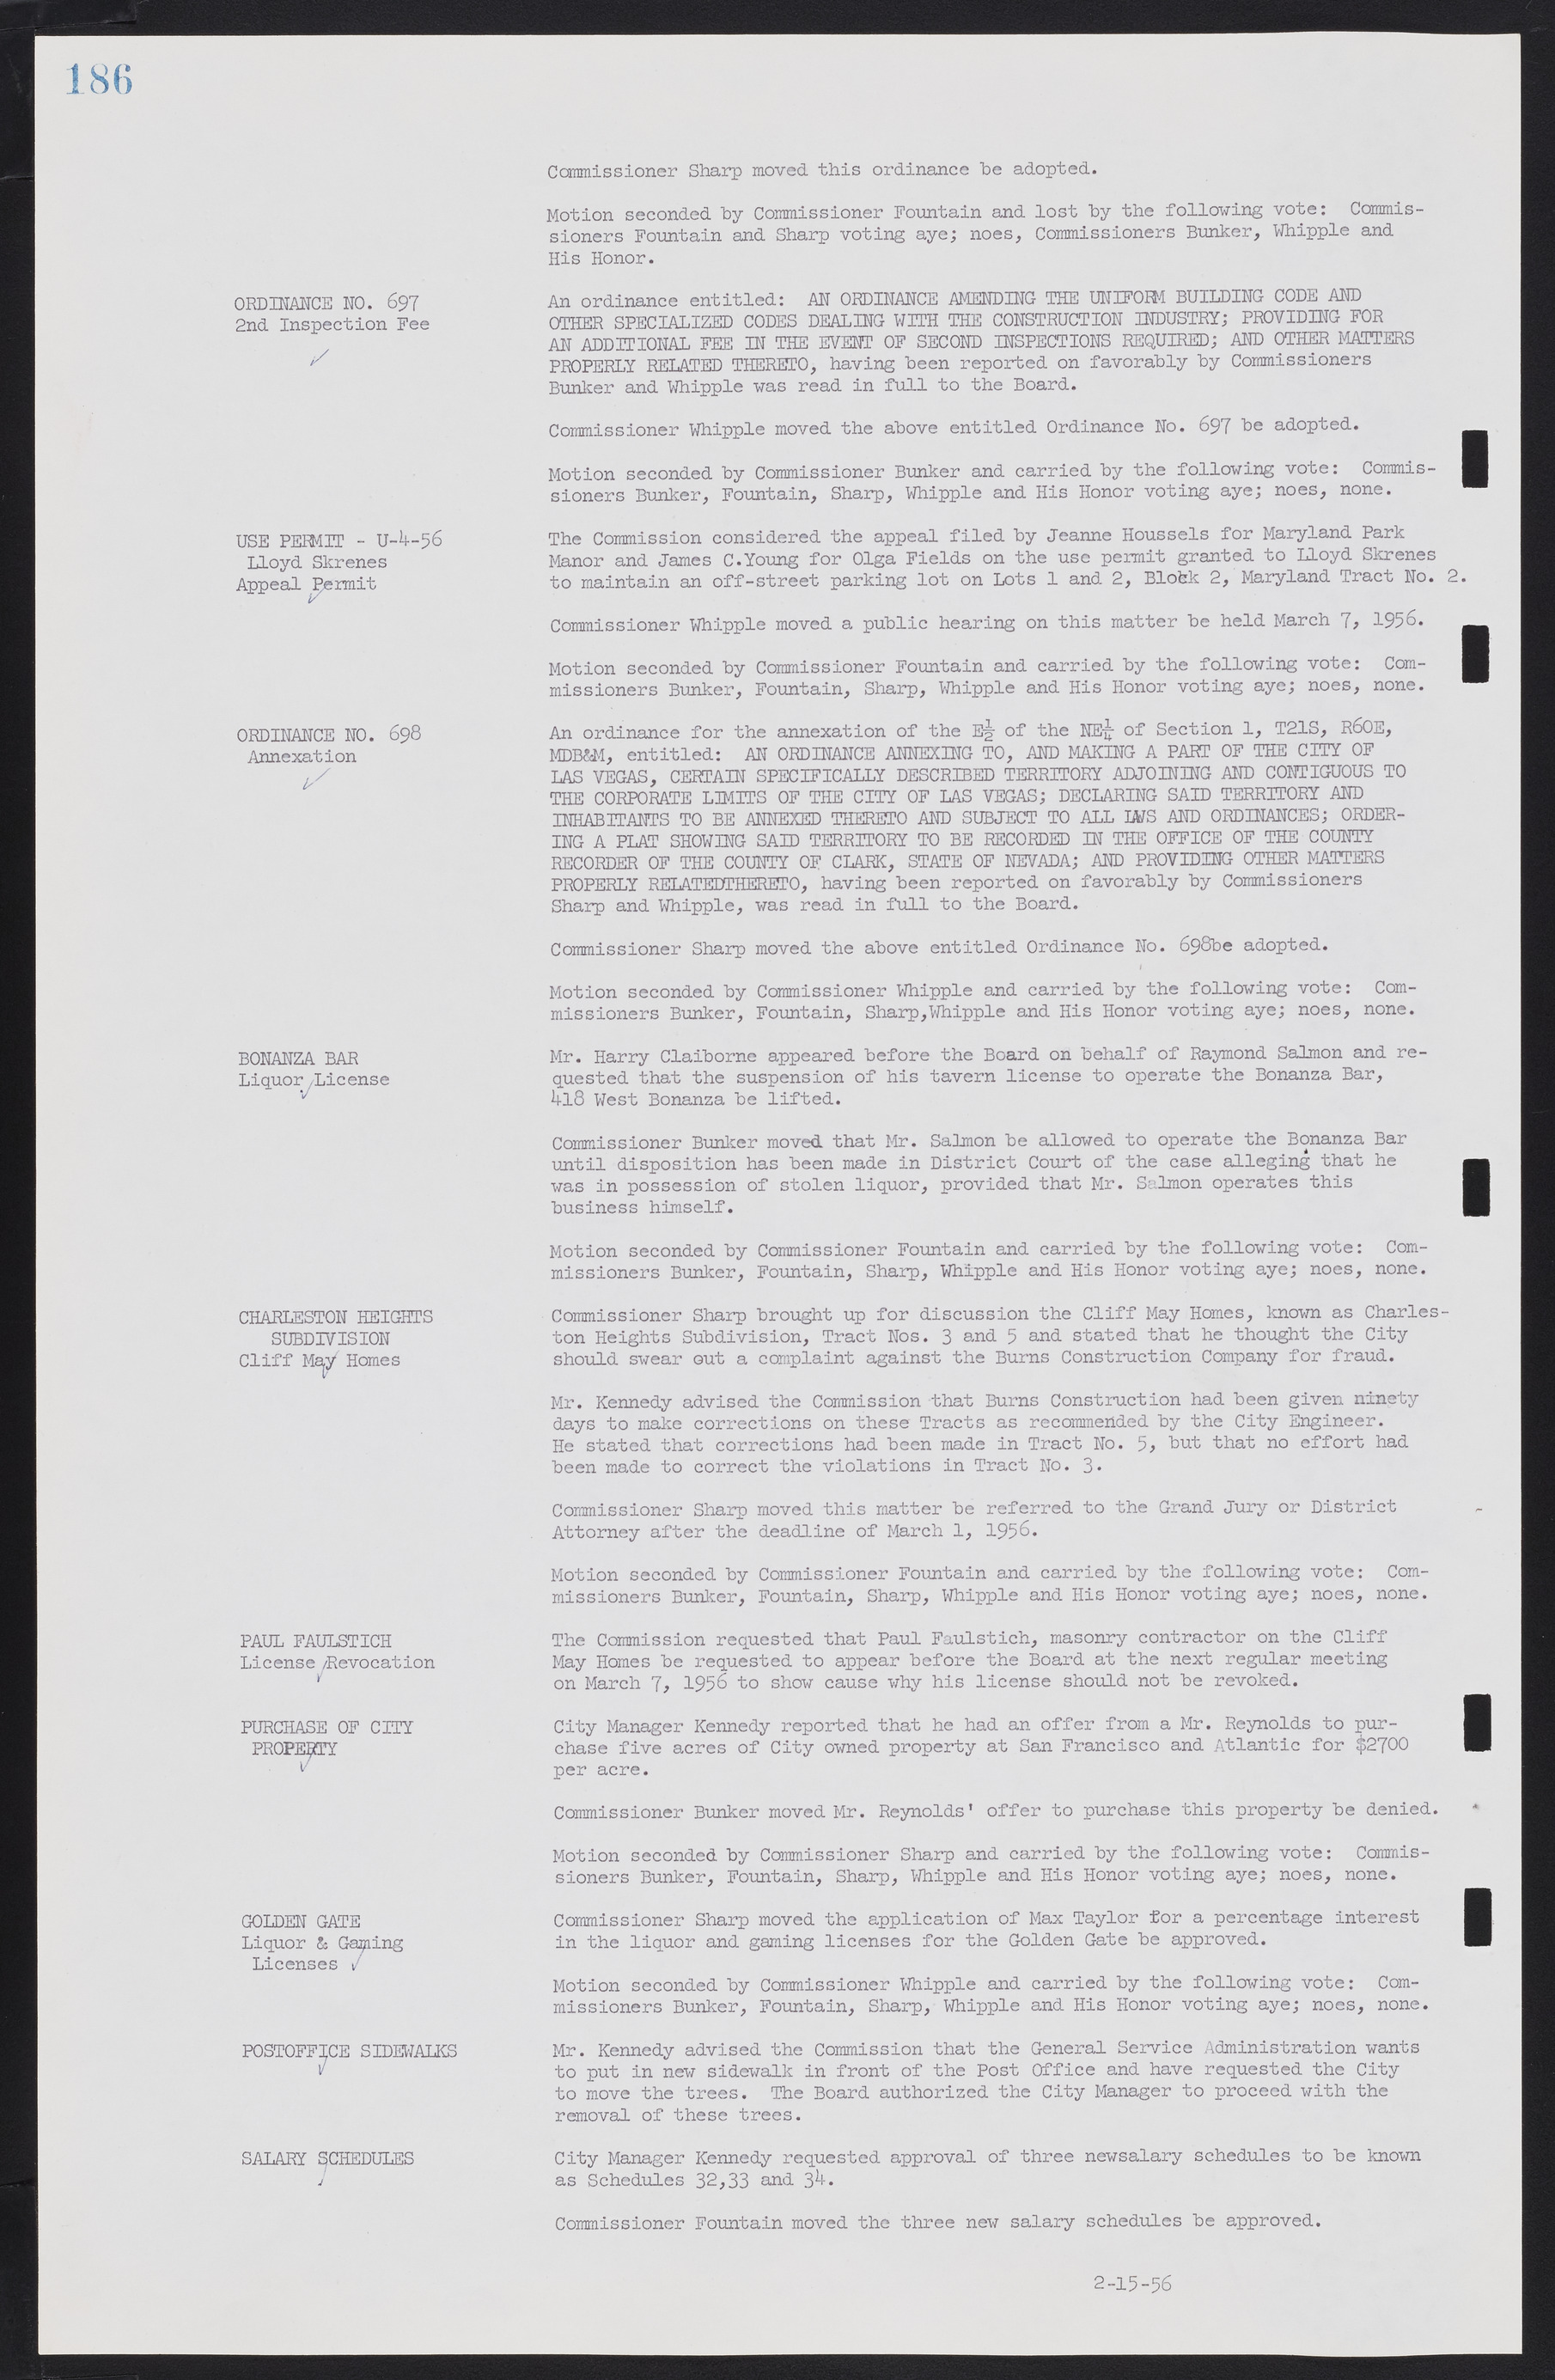 Las Vegas City Commission Minutes, September 21, 1955 to November 20, 1957, lvc000010-202